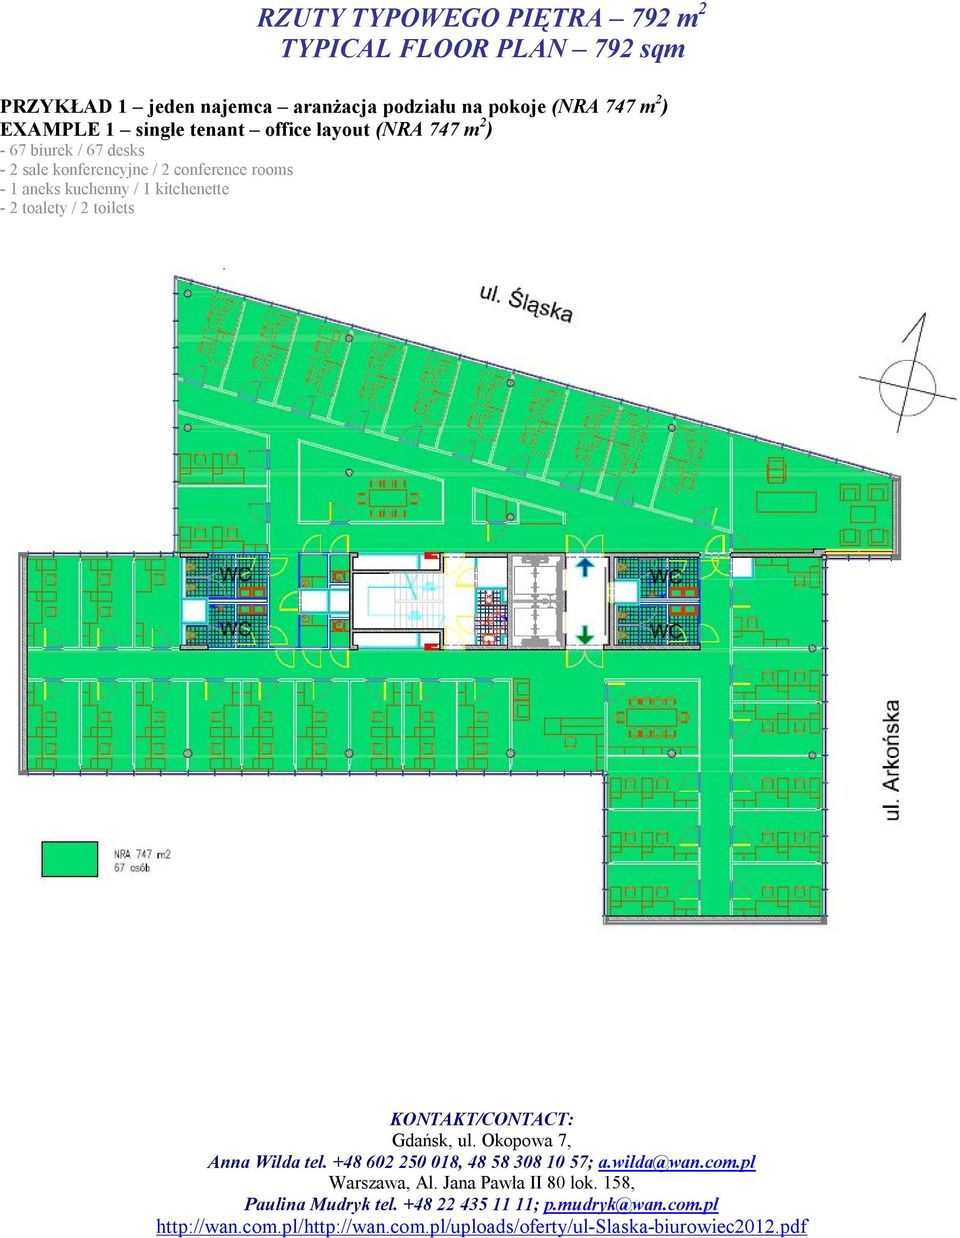 single tenant office layout (NRA 747 m 2 ) - 67 biurek / 67 desks - 2